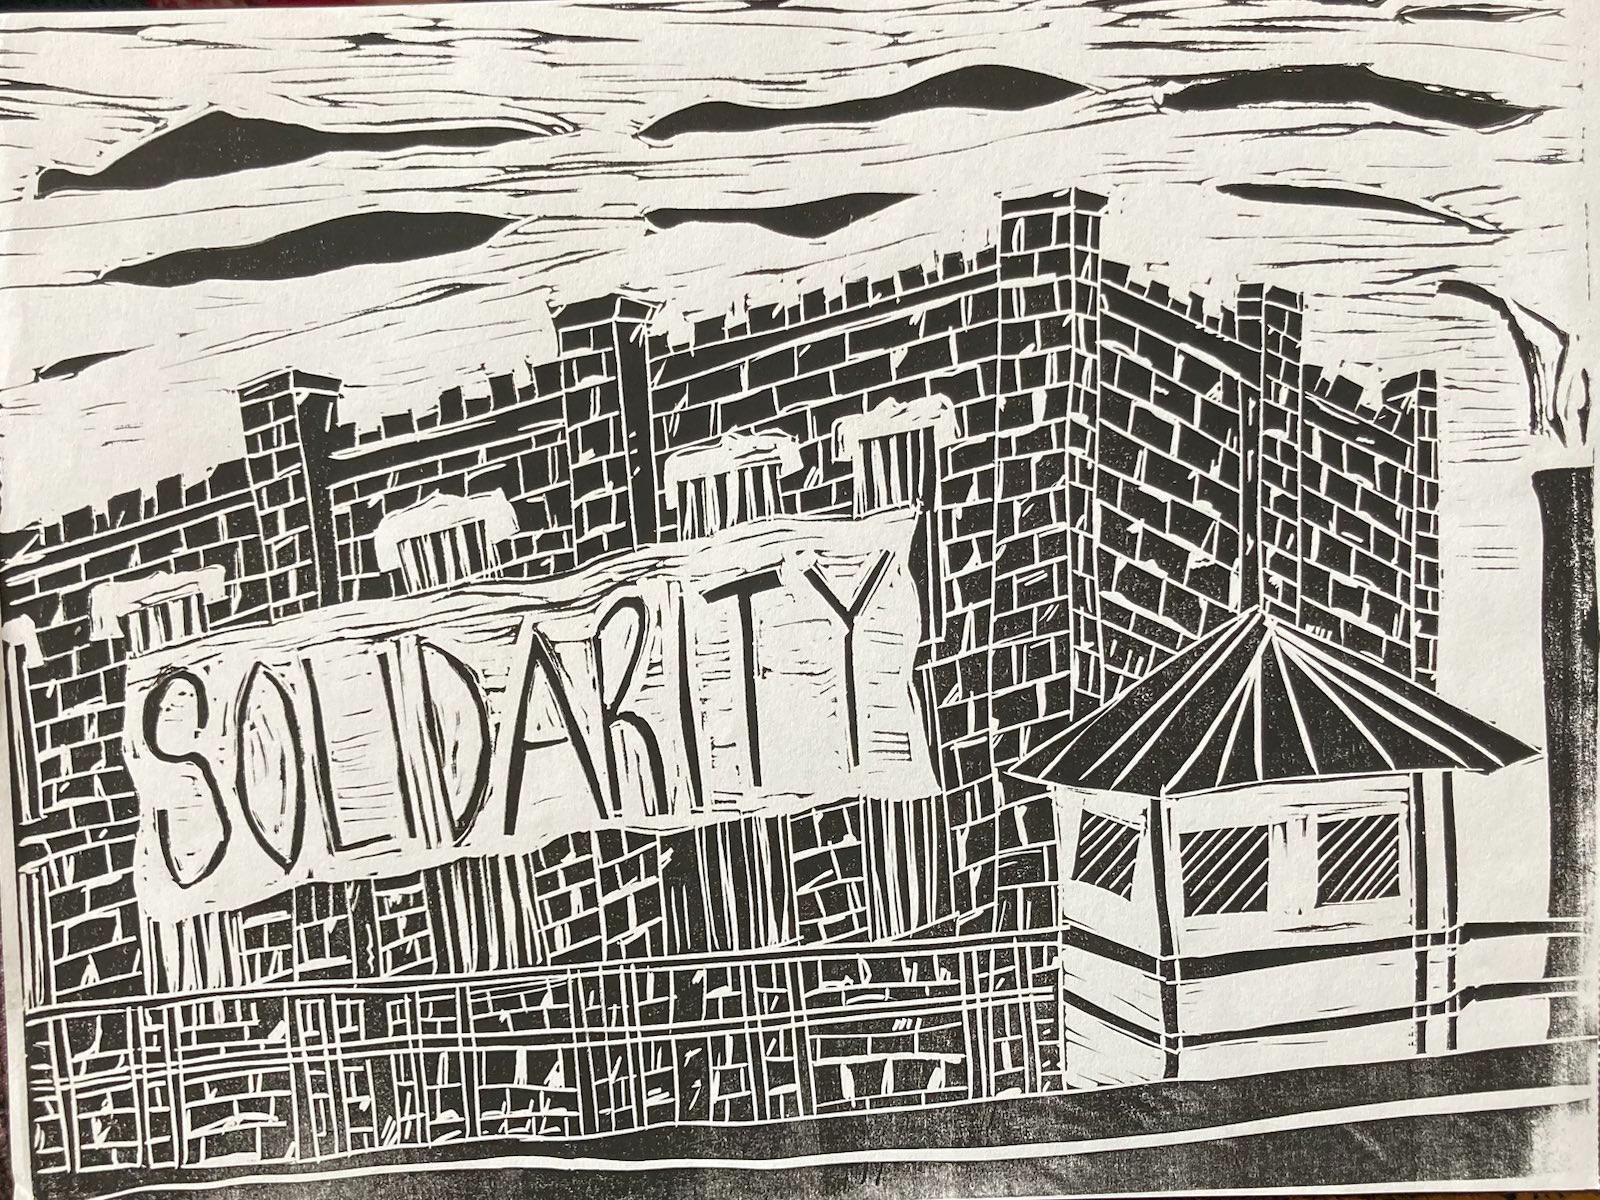 Lino-cut illustration of a solidarity banner across prison walls